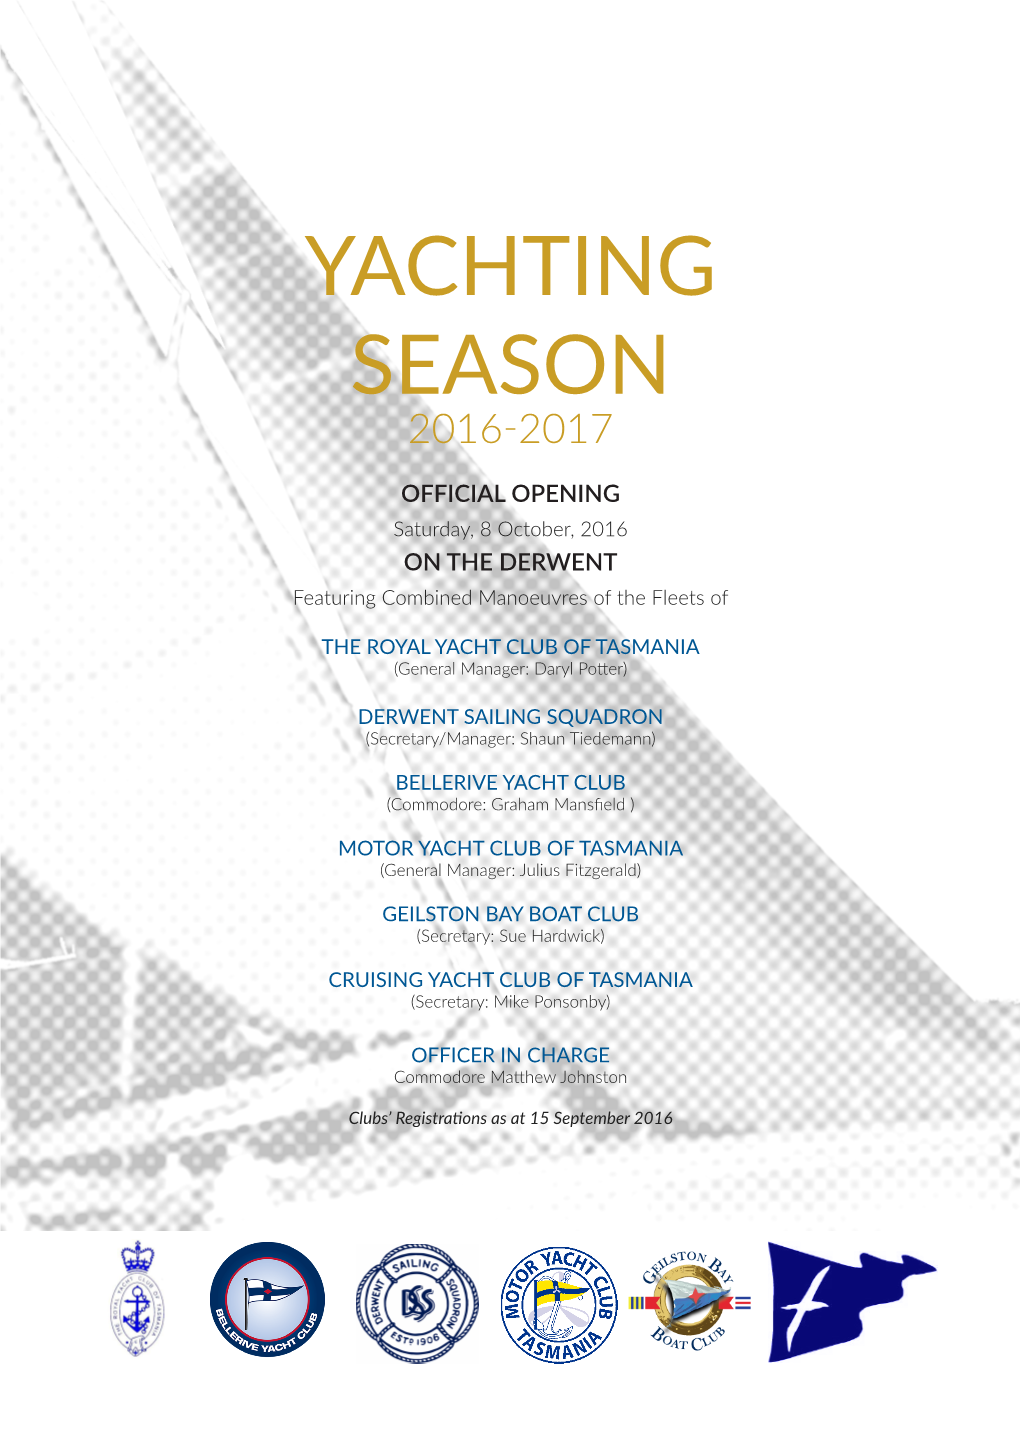 Yachting Season 2016-2017